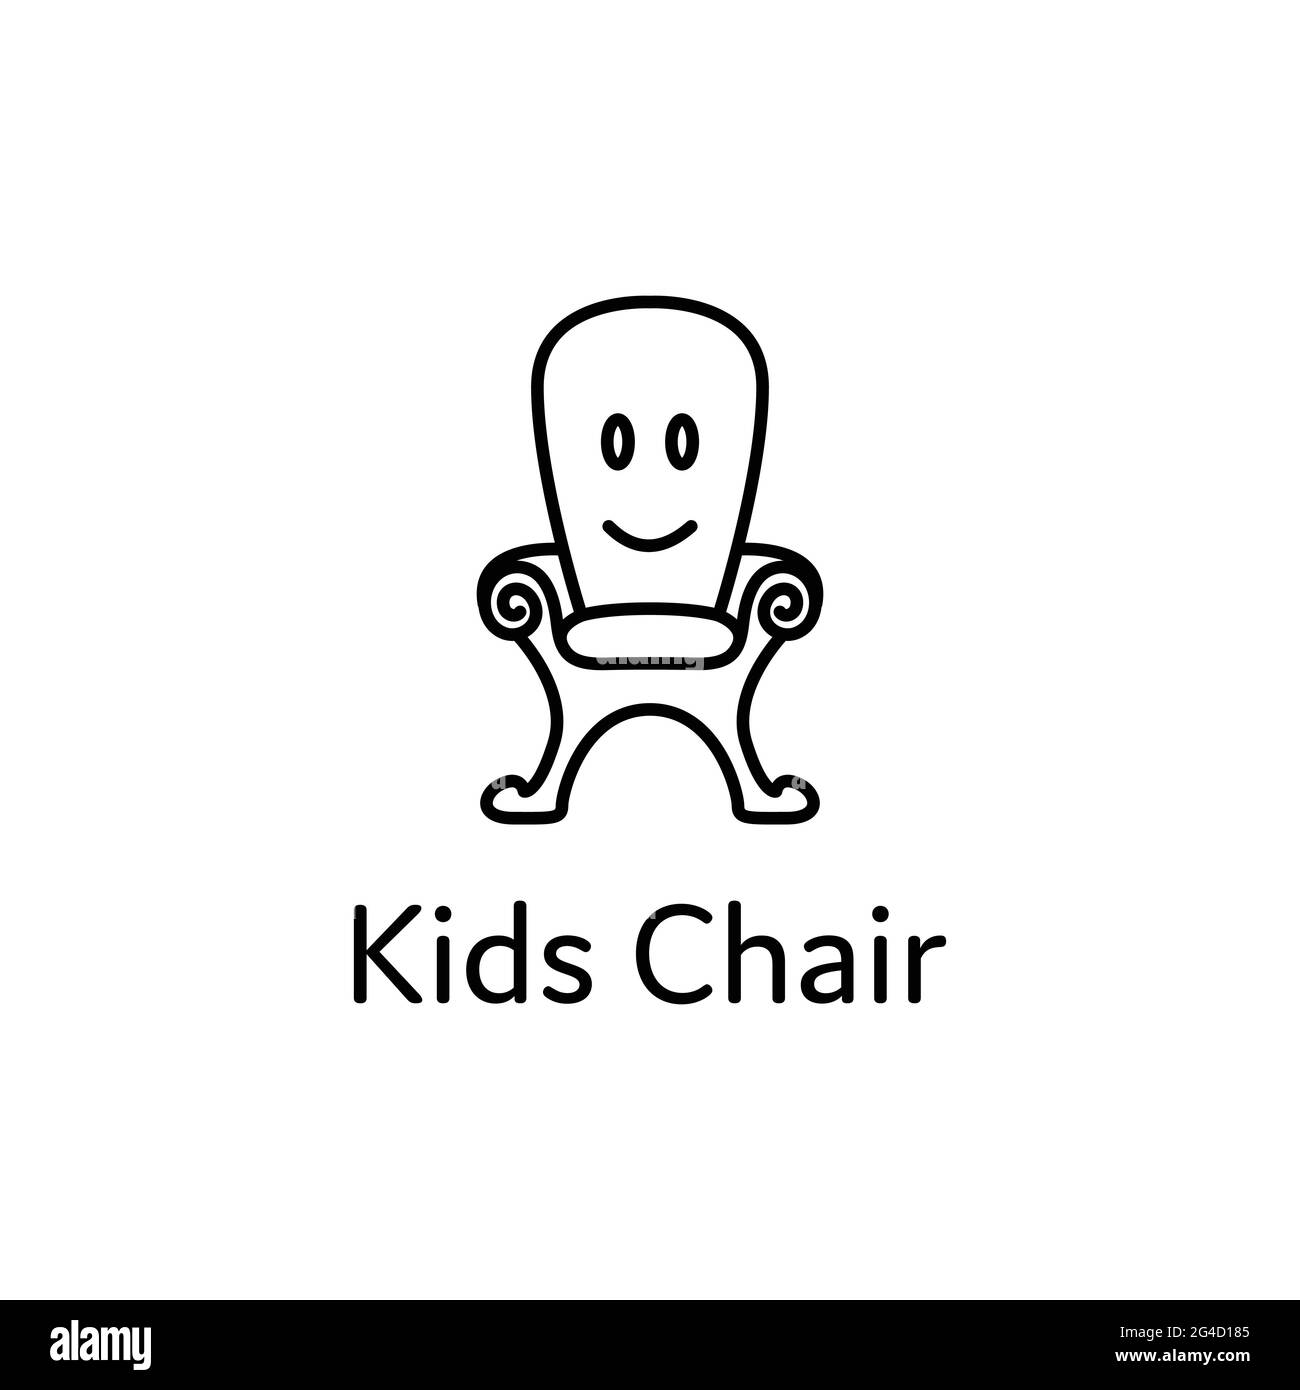 interior logo kids chair design monoline style room decoration vector ...